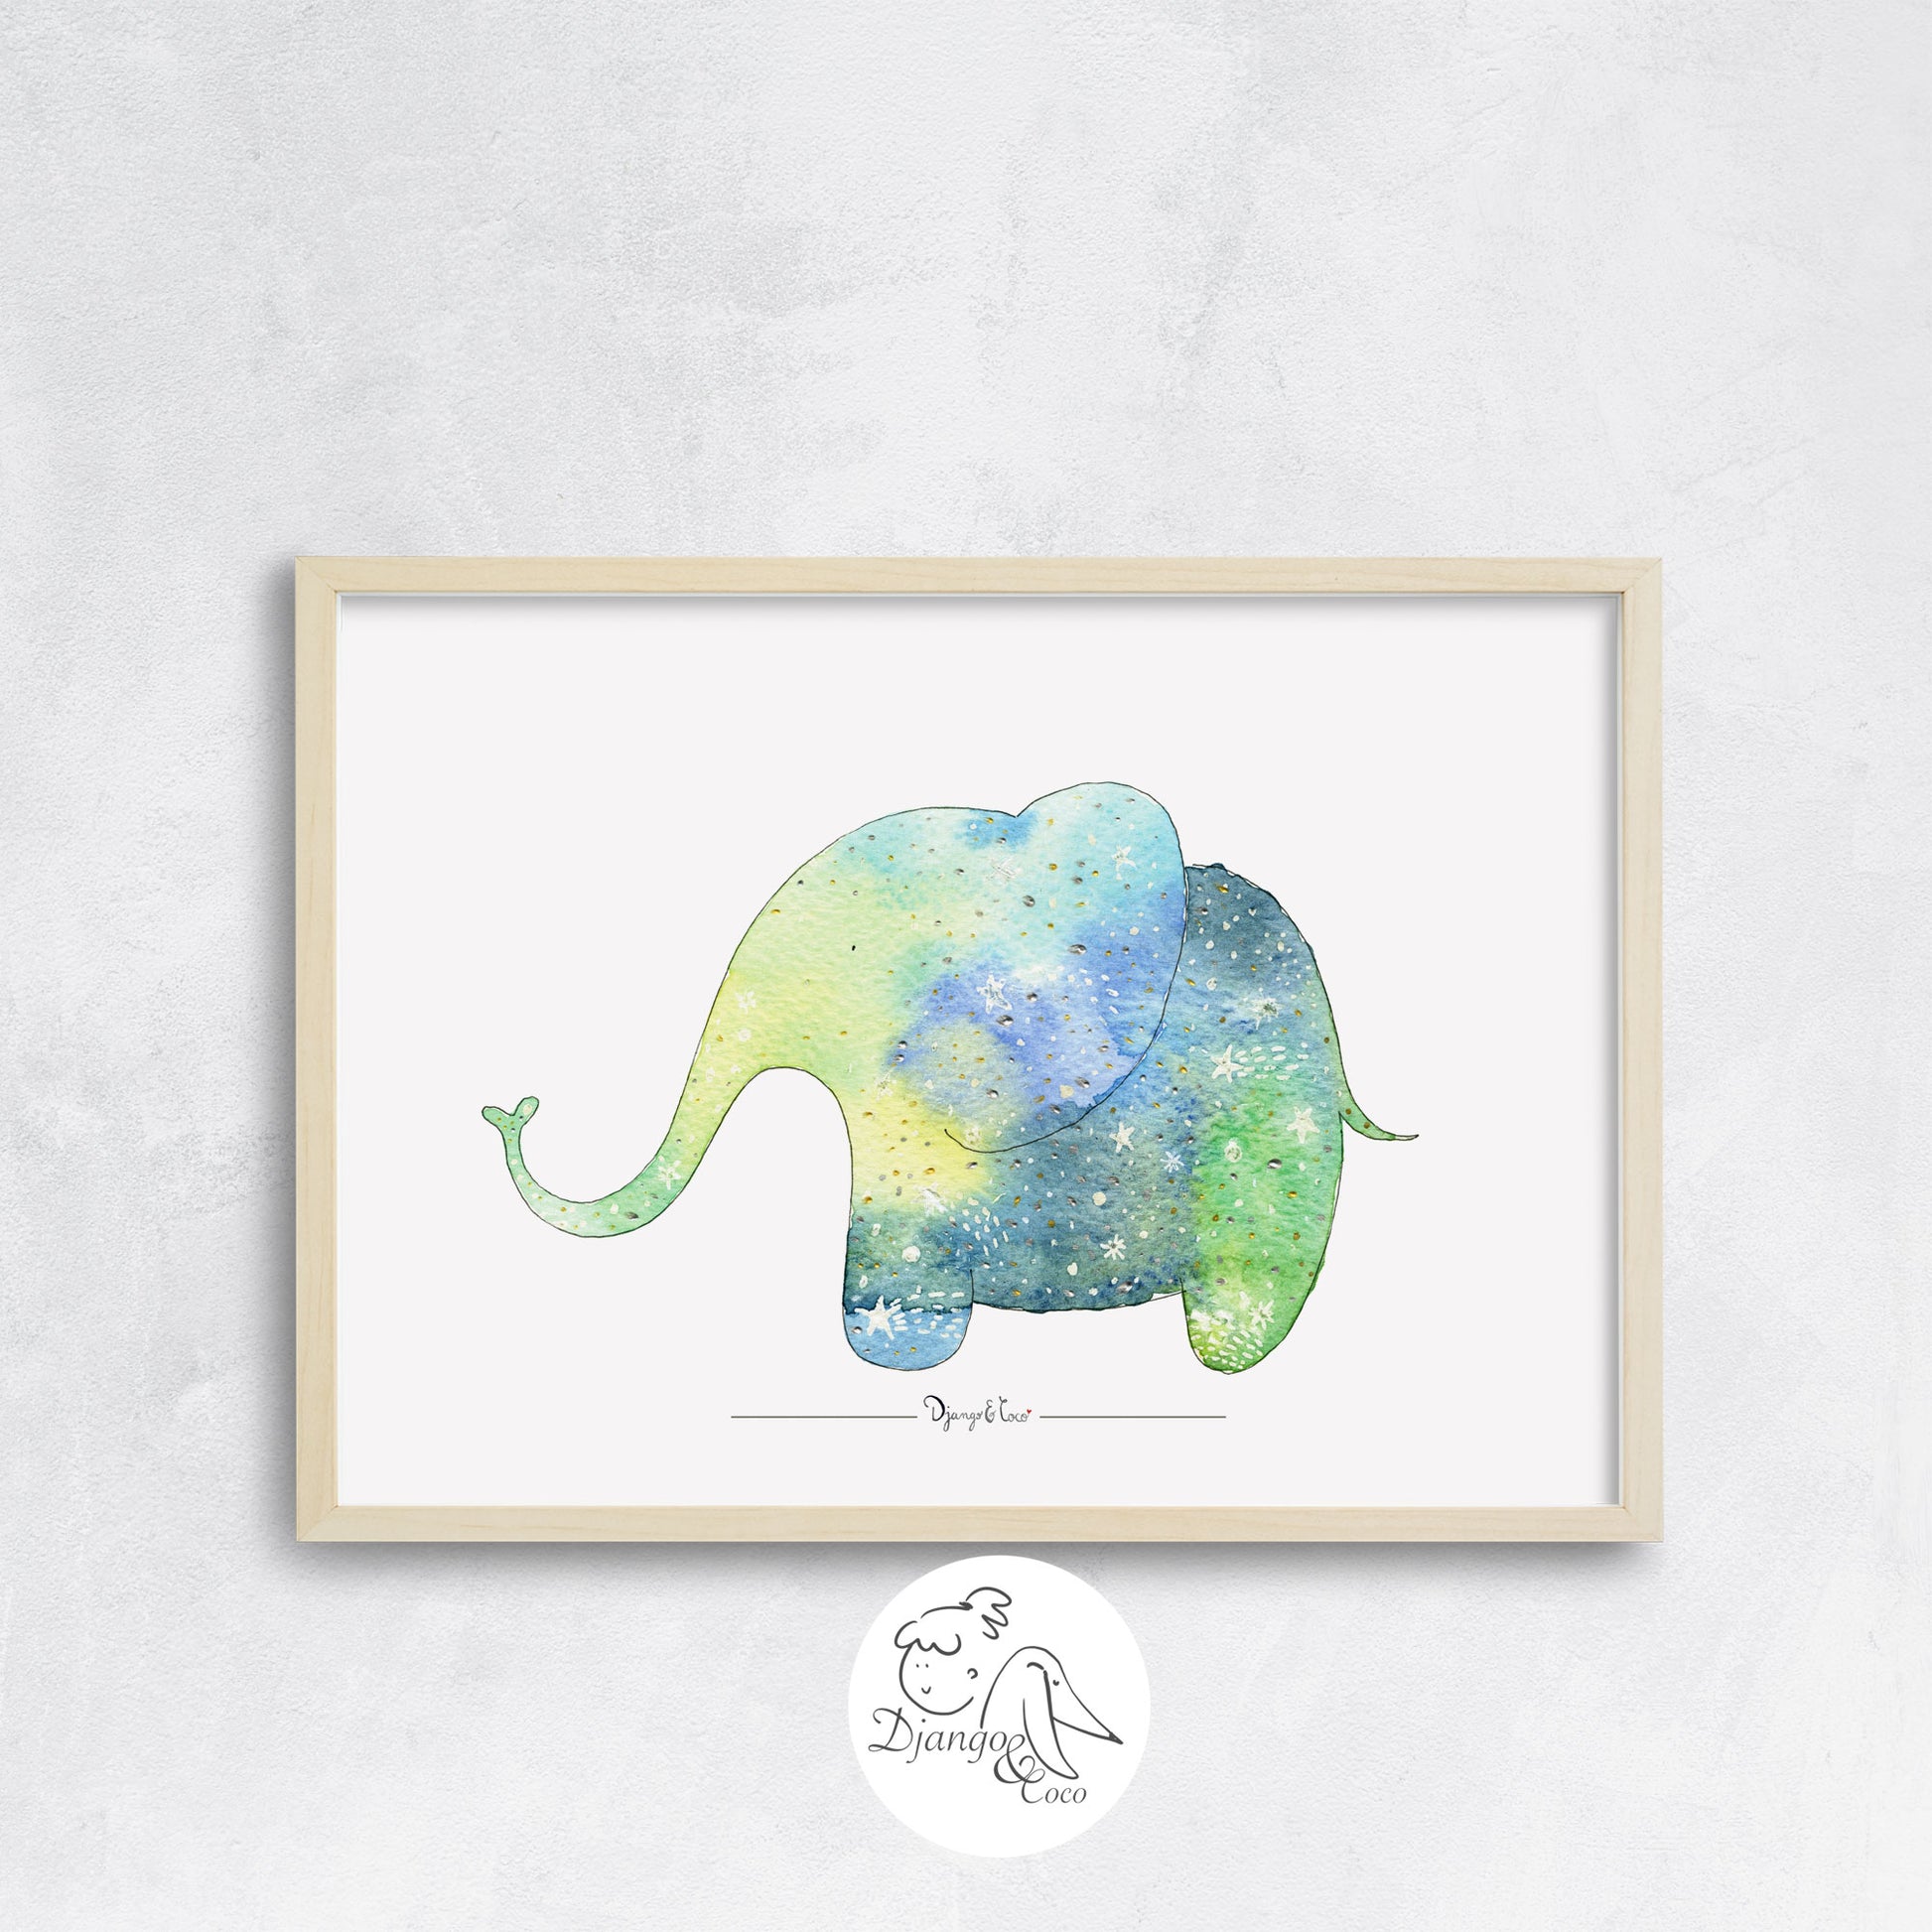 Galaxy elephant kids illustration